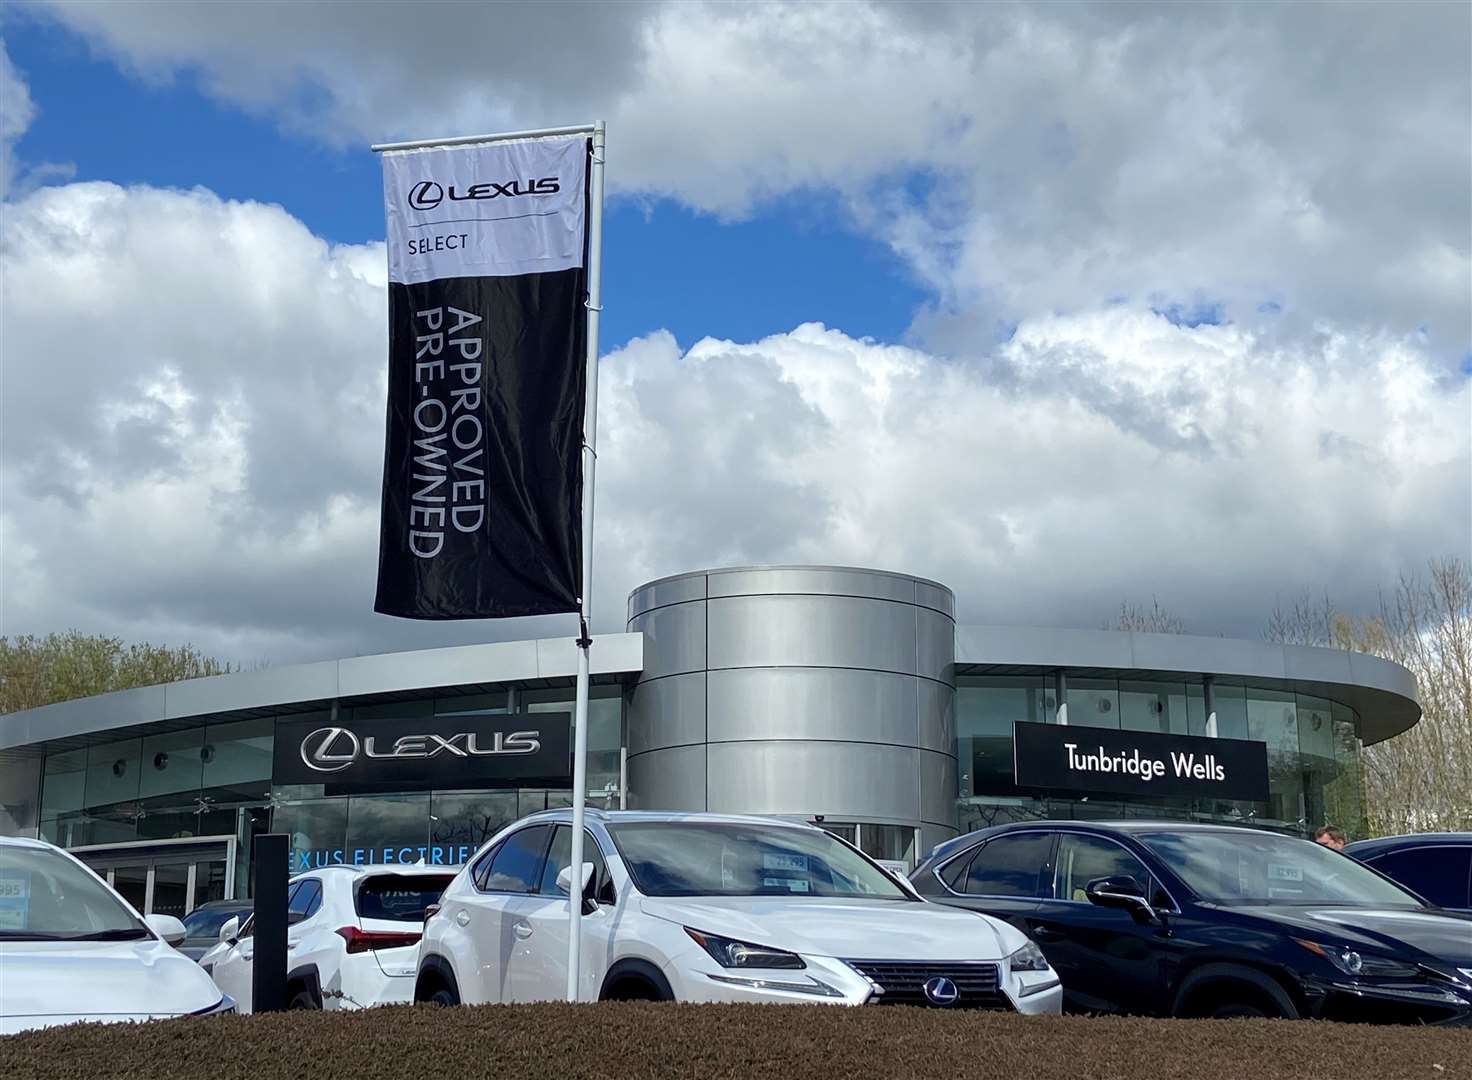 The Motorline Lexus dealership in Tunbridge Wells